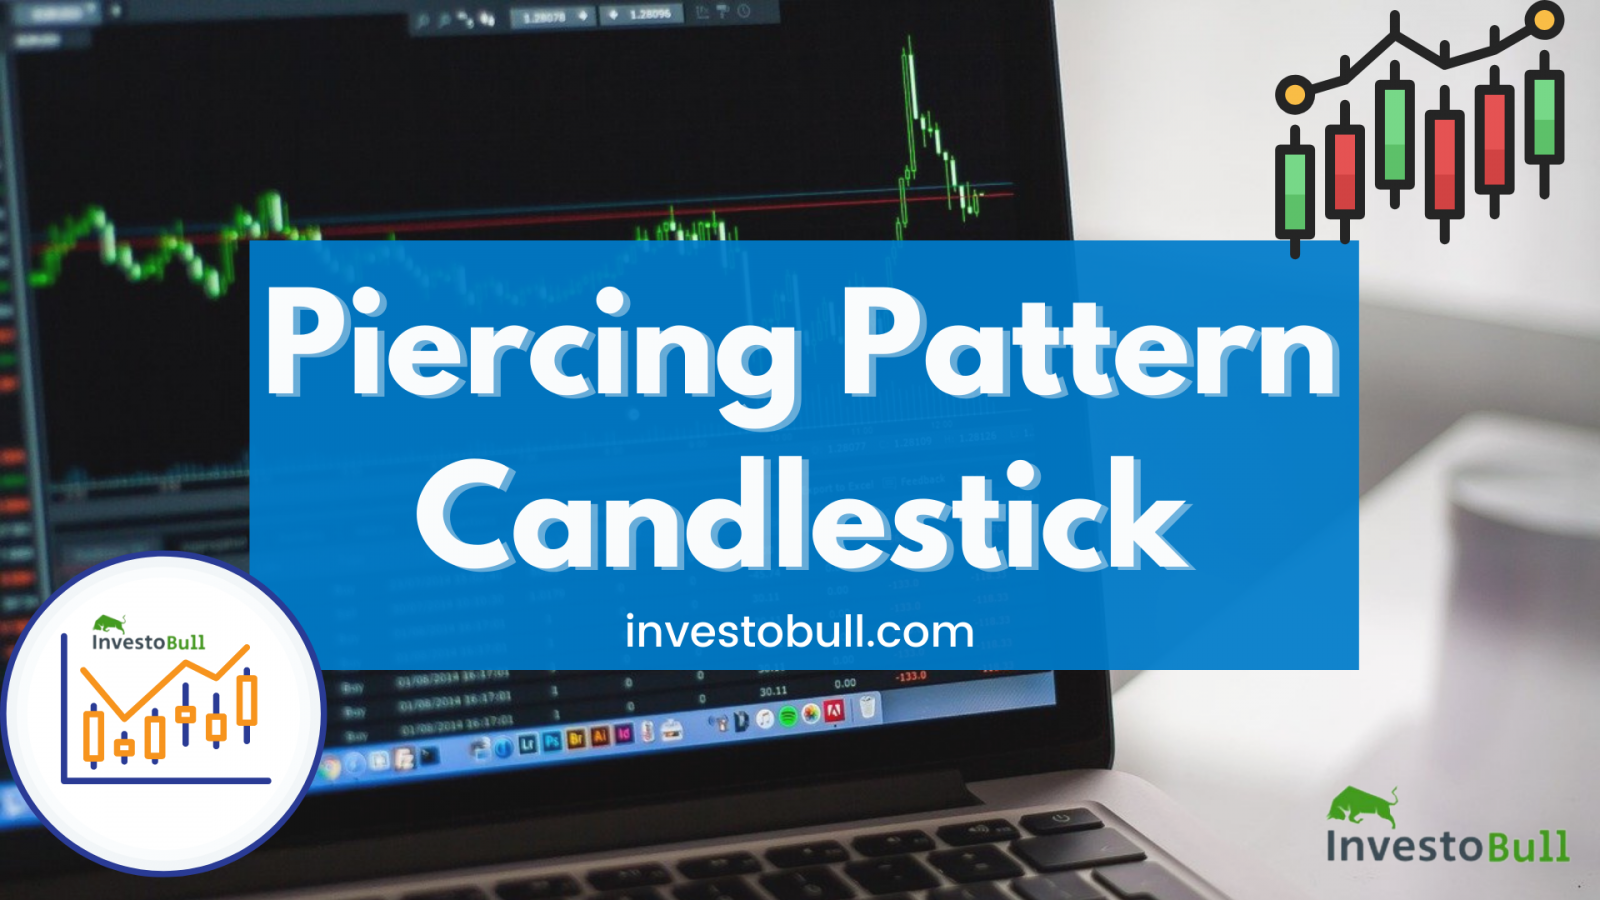 Piercing Pattern Candlestick